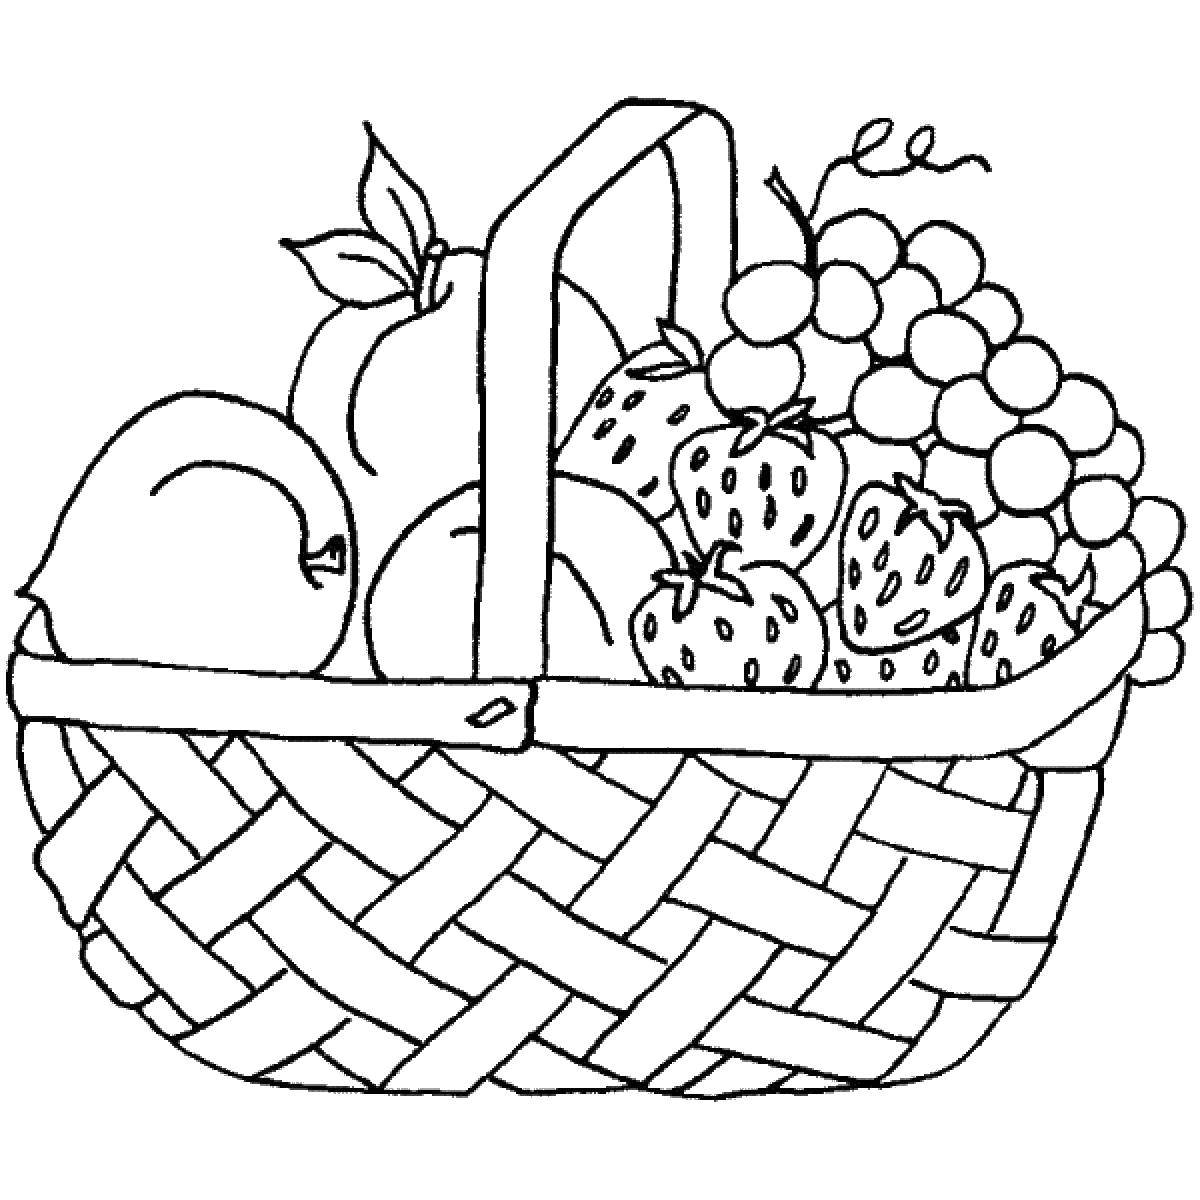 Название: Раскраска Корзина фруктов.. Категория: фрукты. Теги: еда, фрукты, корзина.